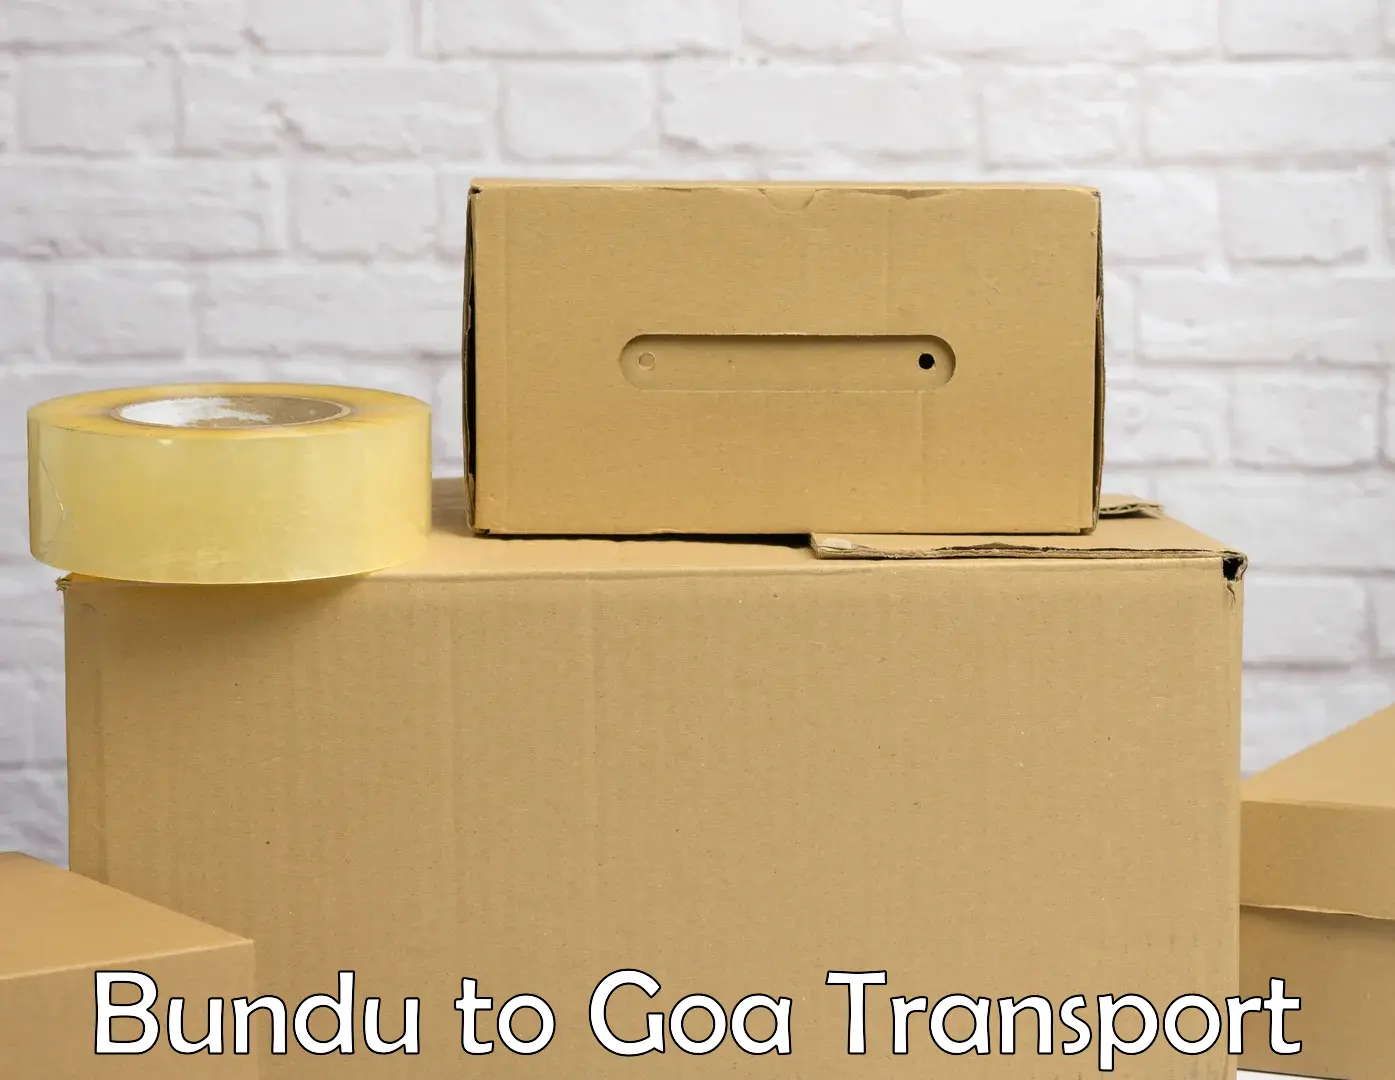 Transport shared services Bundu to Goa